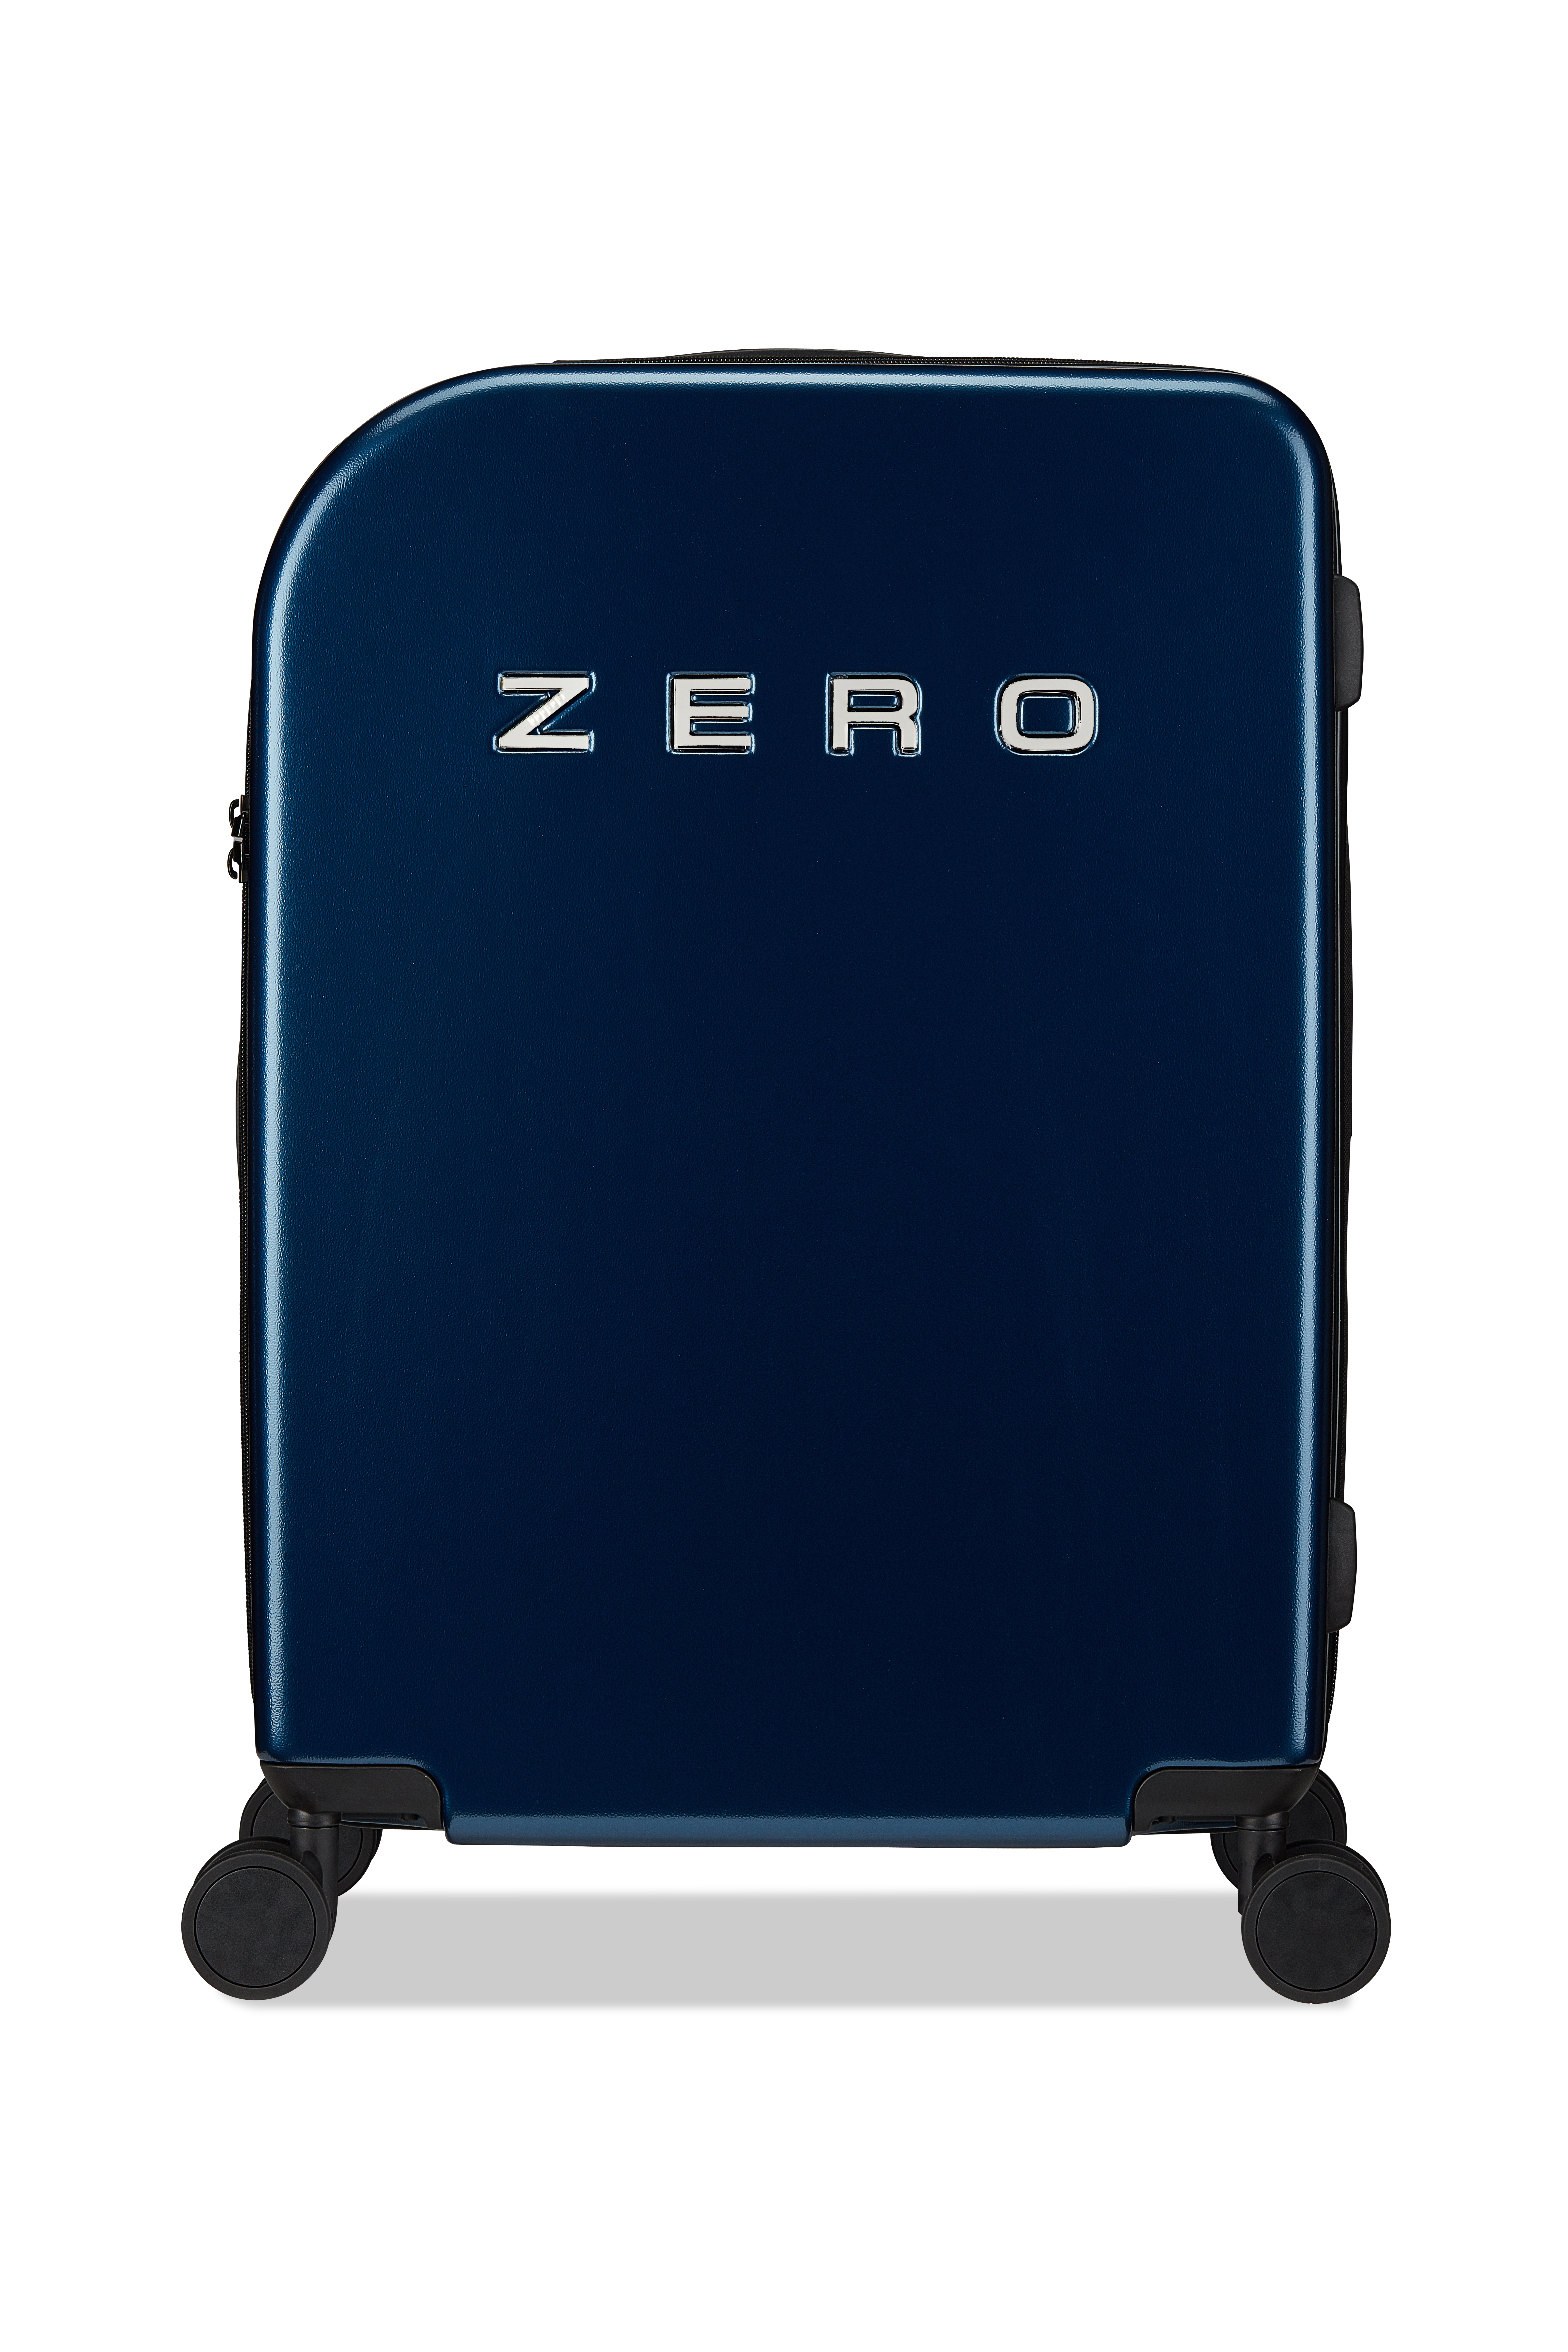 Zero Luggage Navy